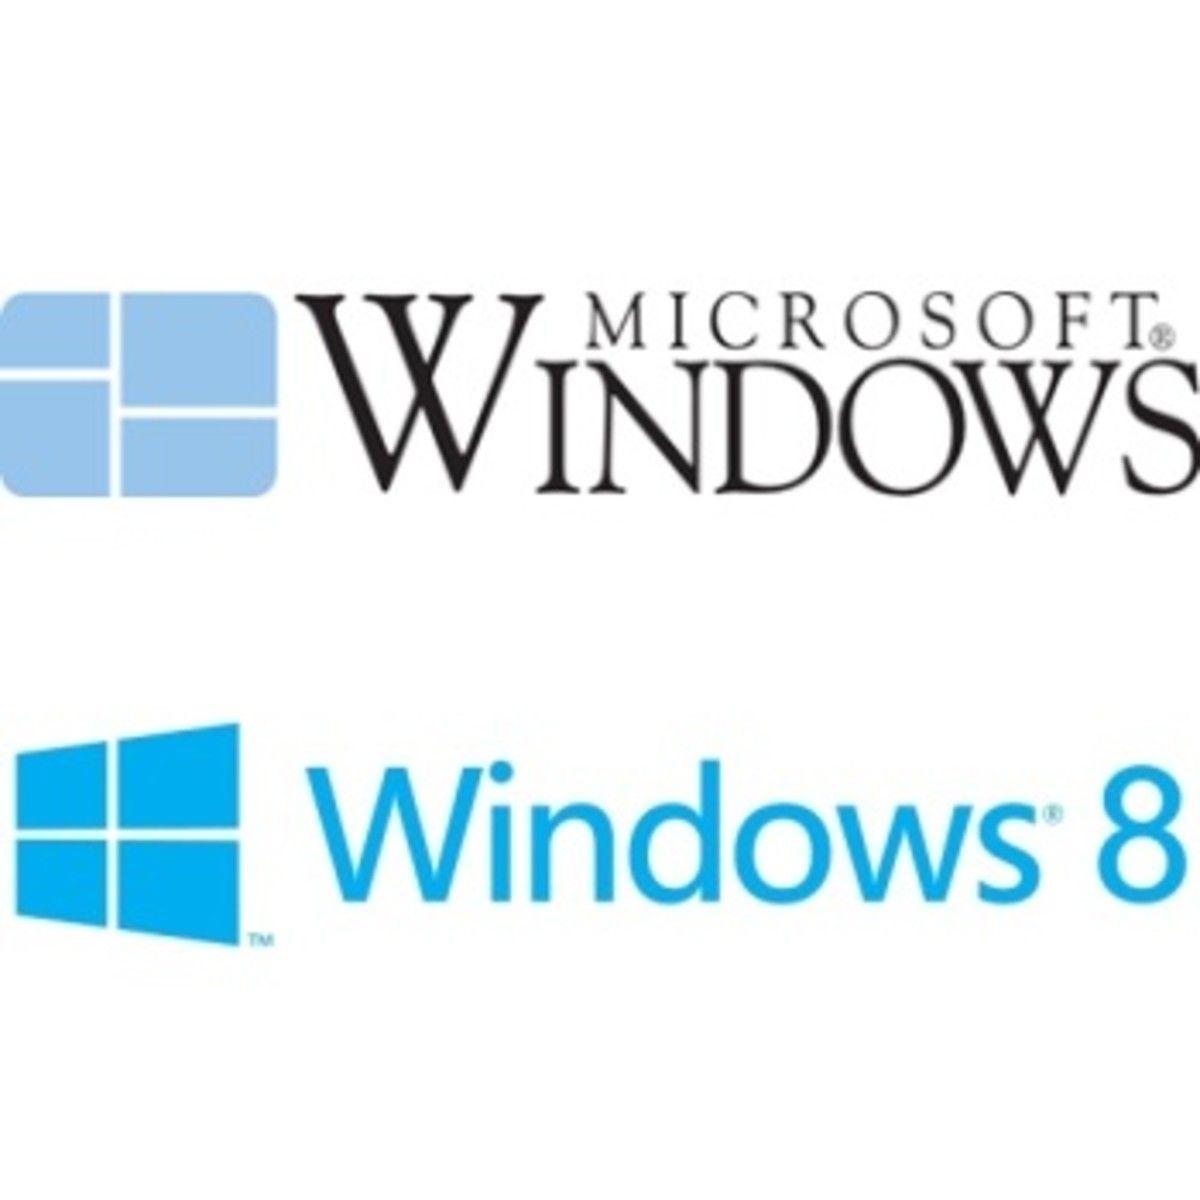 Windows 3.1 Logo - Microsoft unveils Windows 8 logo - PC Retail